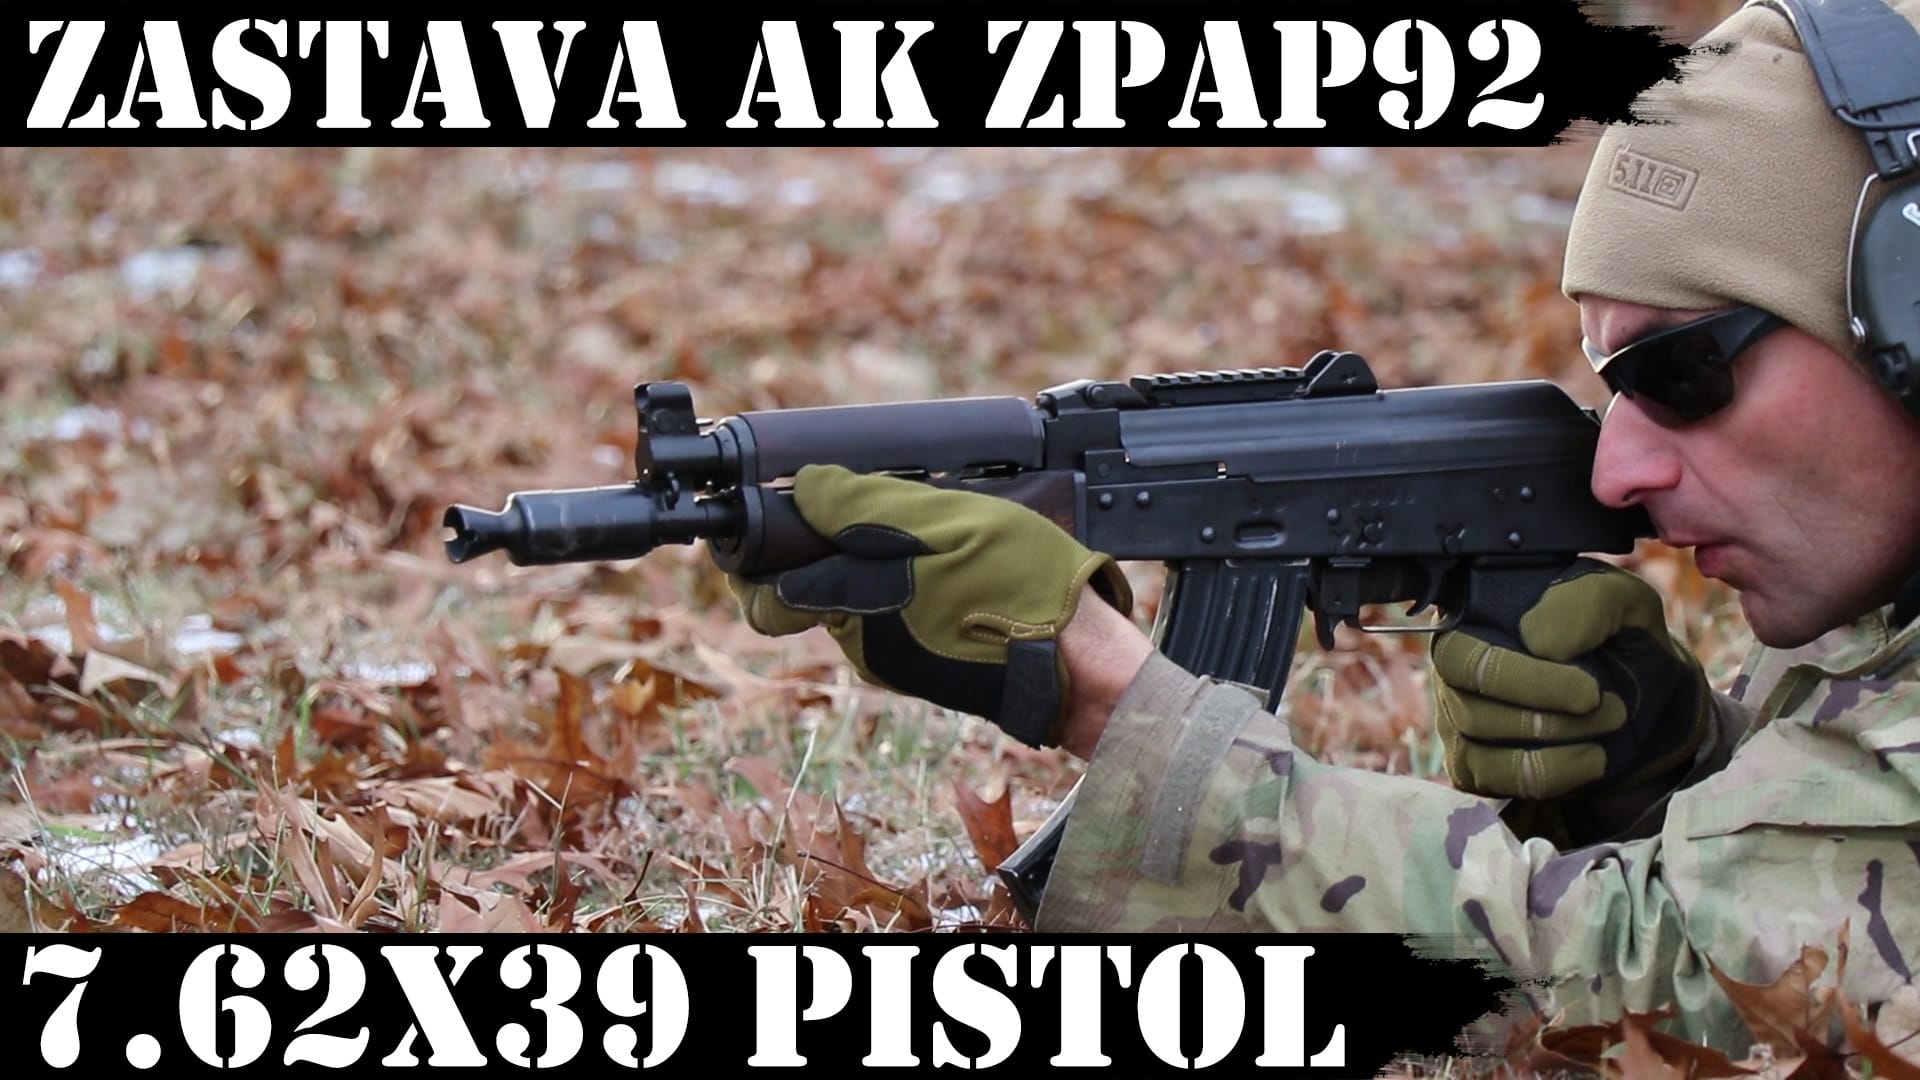 Zastava AK ZPAP92: 7.62×39 Pistol!